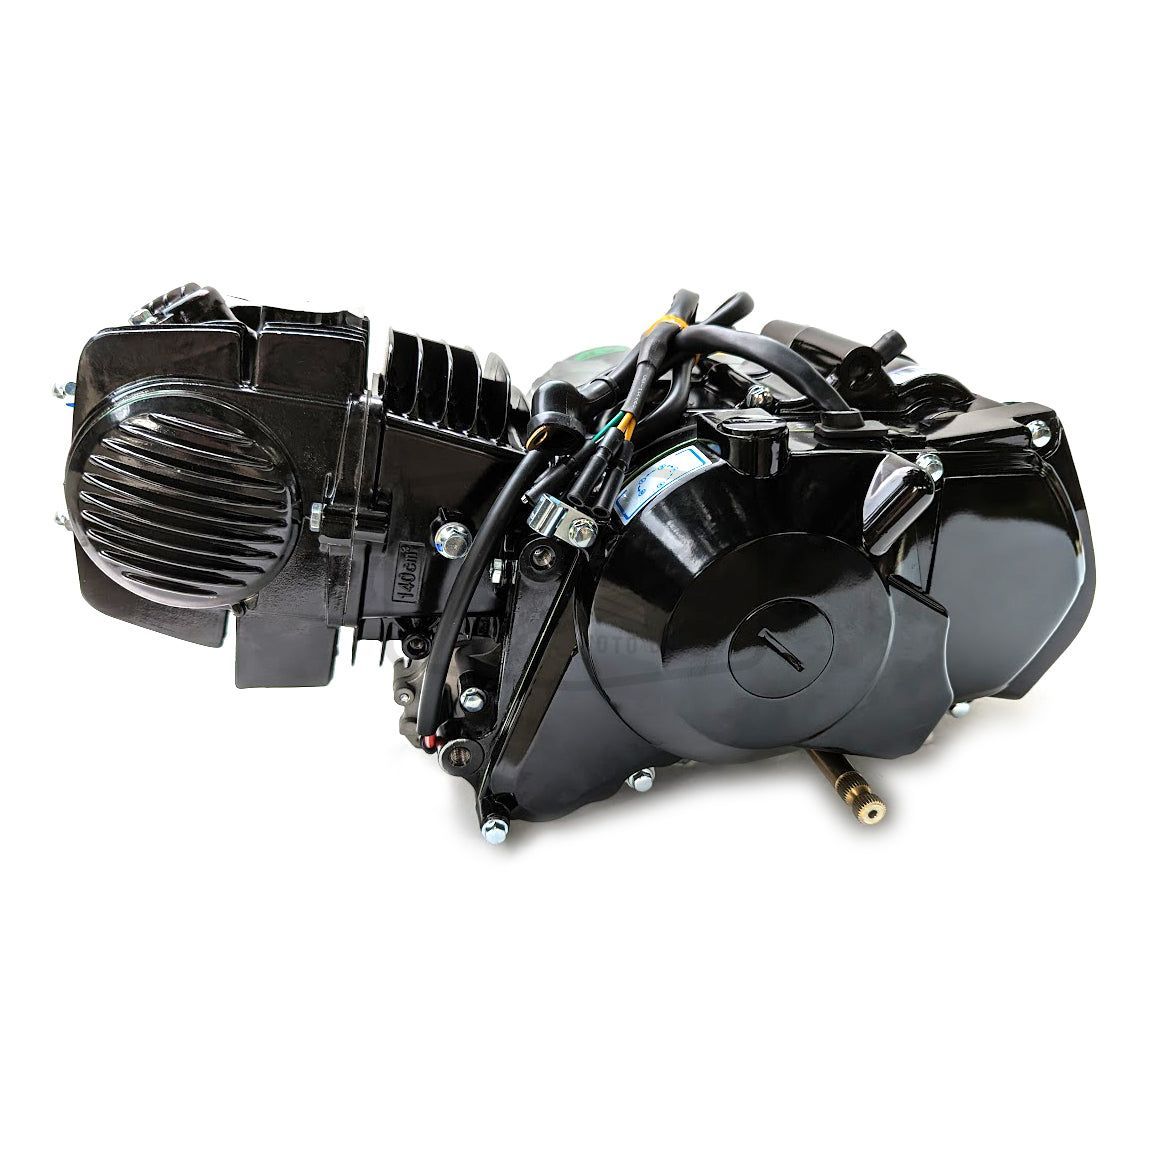 Black YX 140cc Electric Start Semi-Auto Full Kit